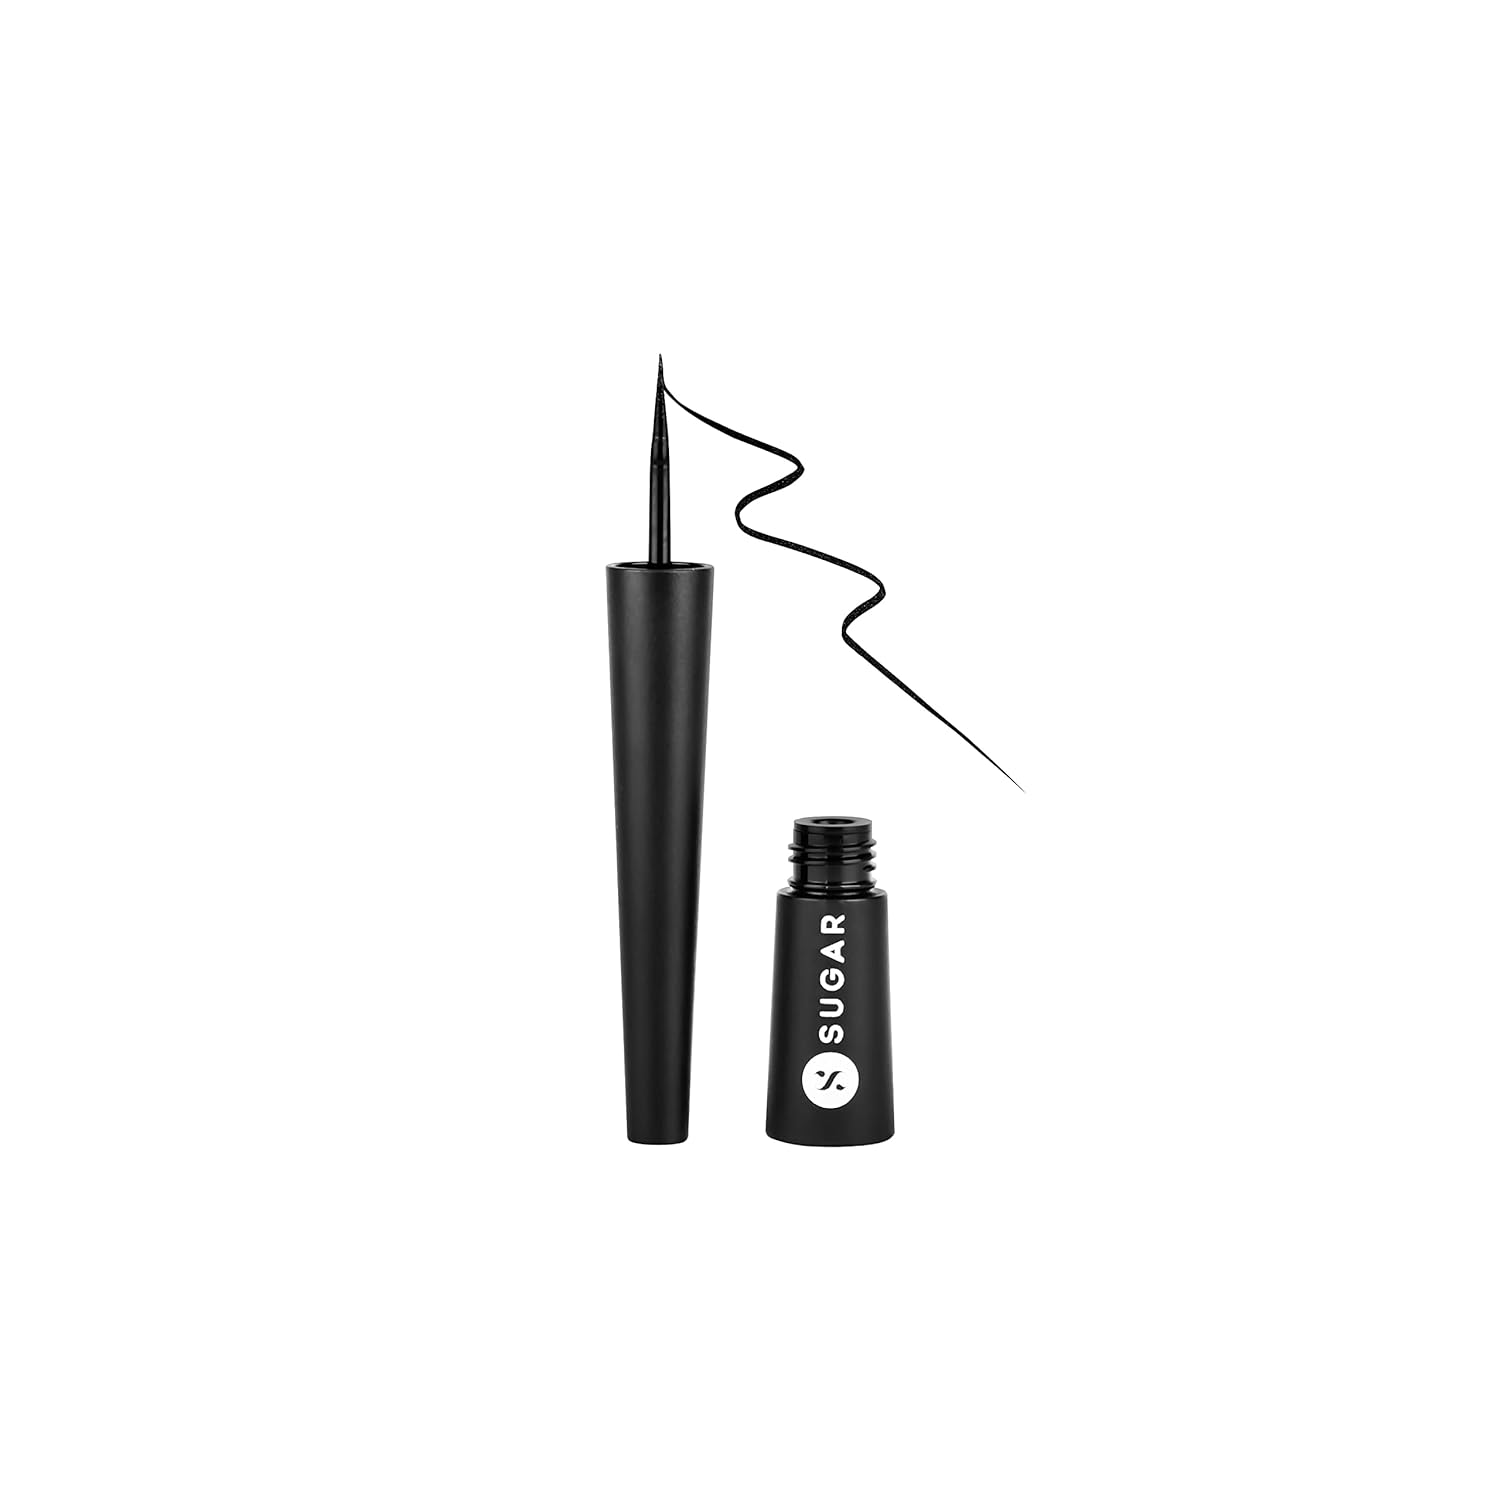 SUGAR Cosmetics Gloss Boss 24HR Eyeliner01 Back In Black (Black) Long lasting, 24hr Coverage